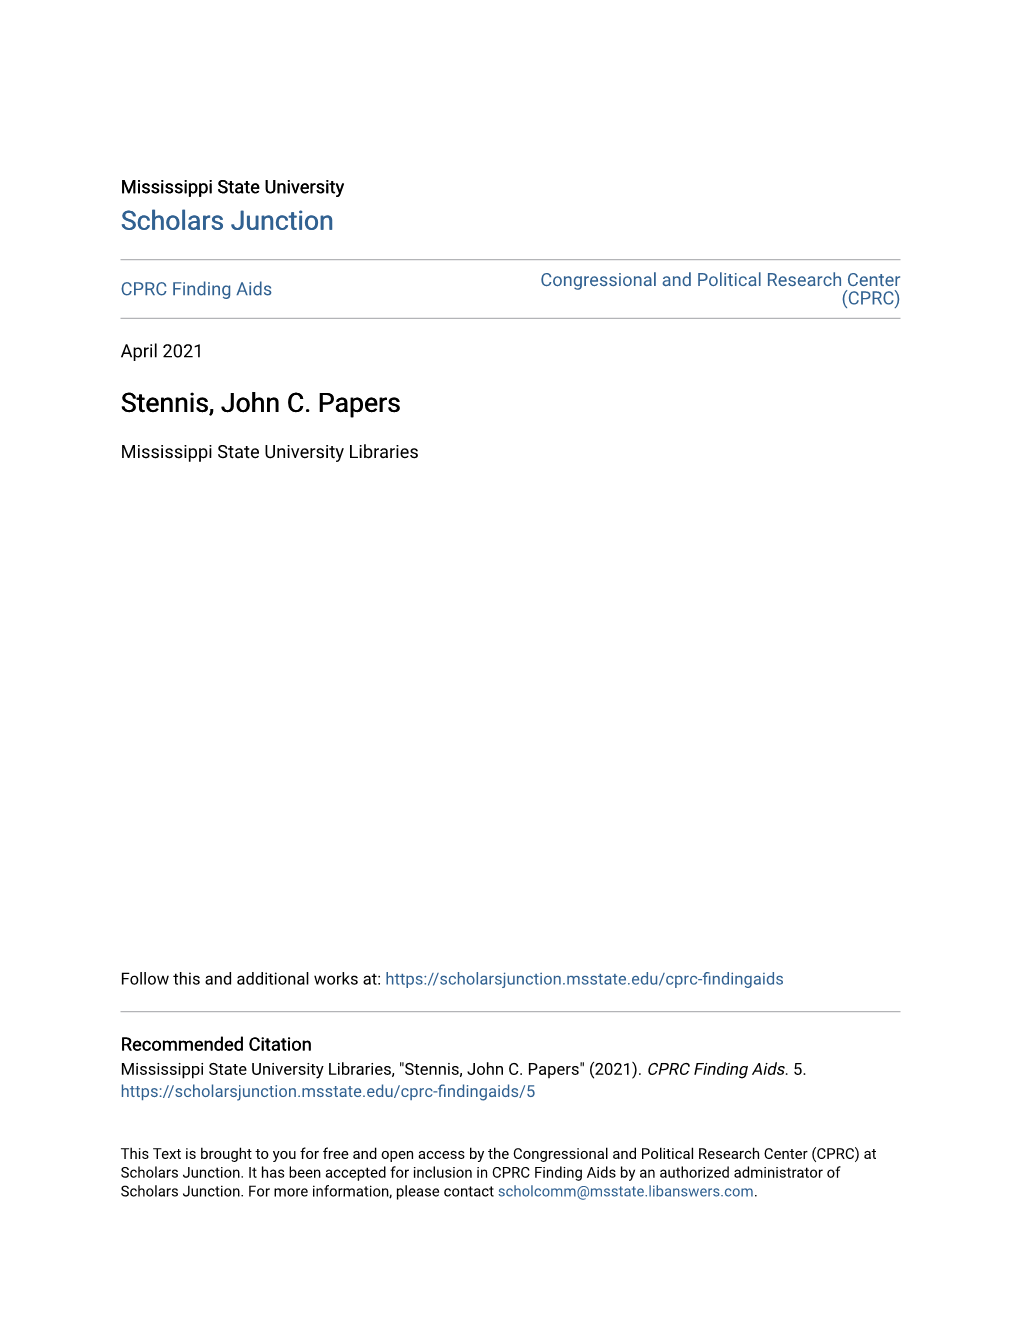 Stennis, John C. Papers